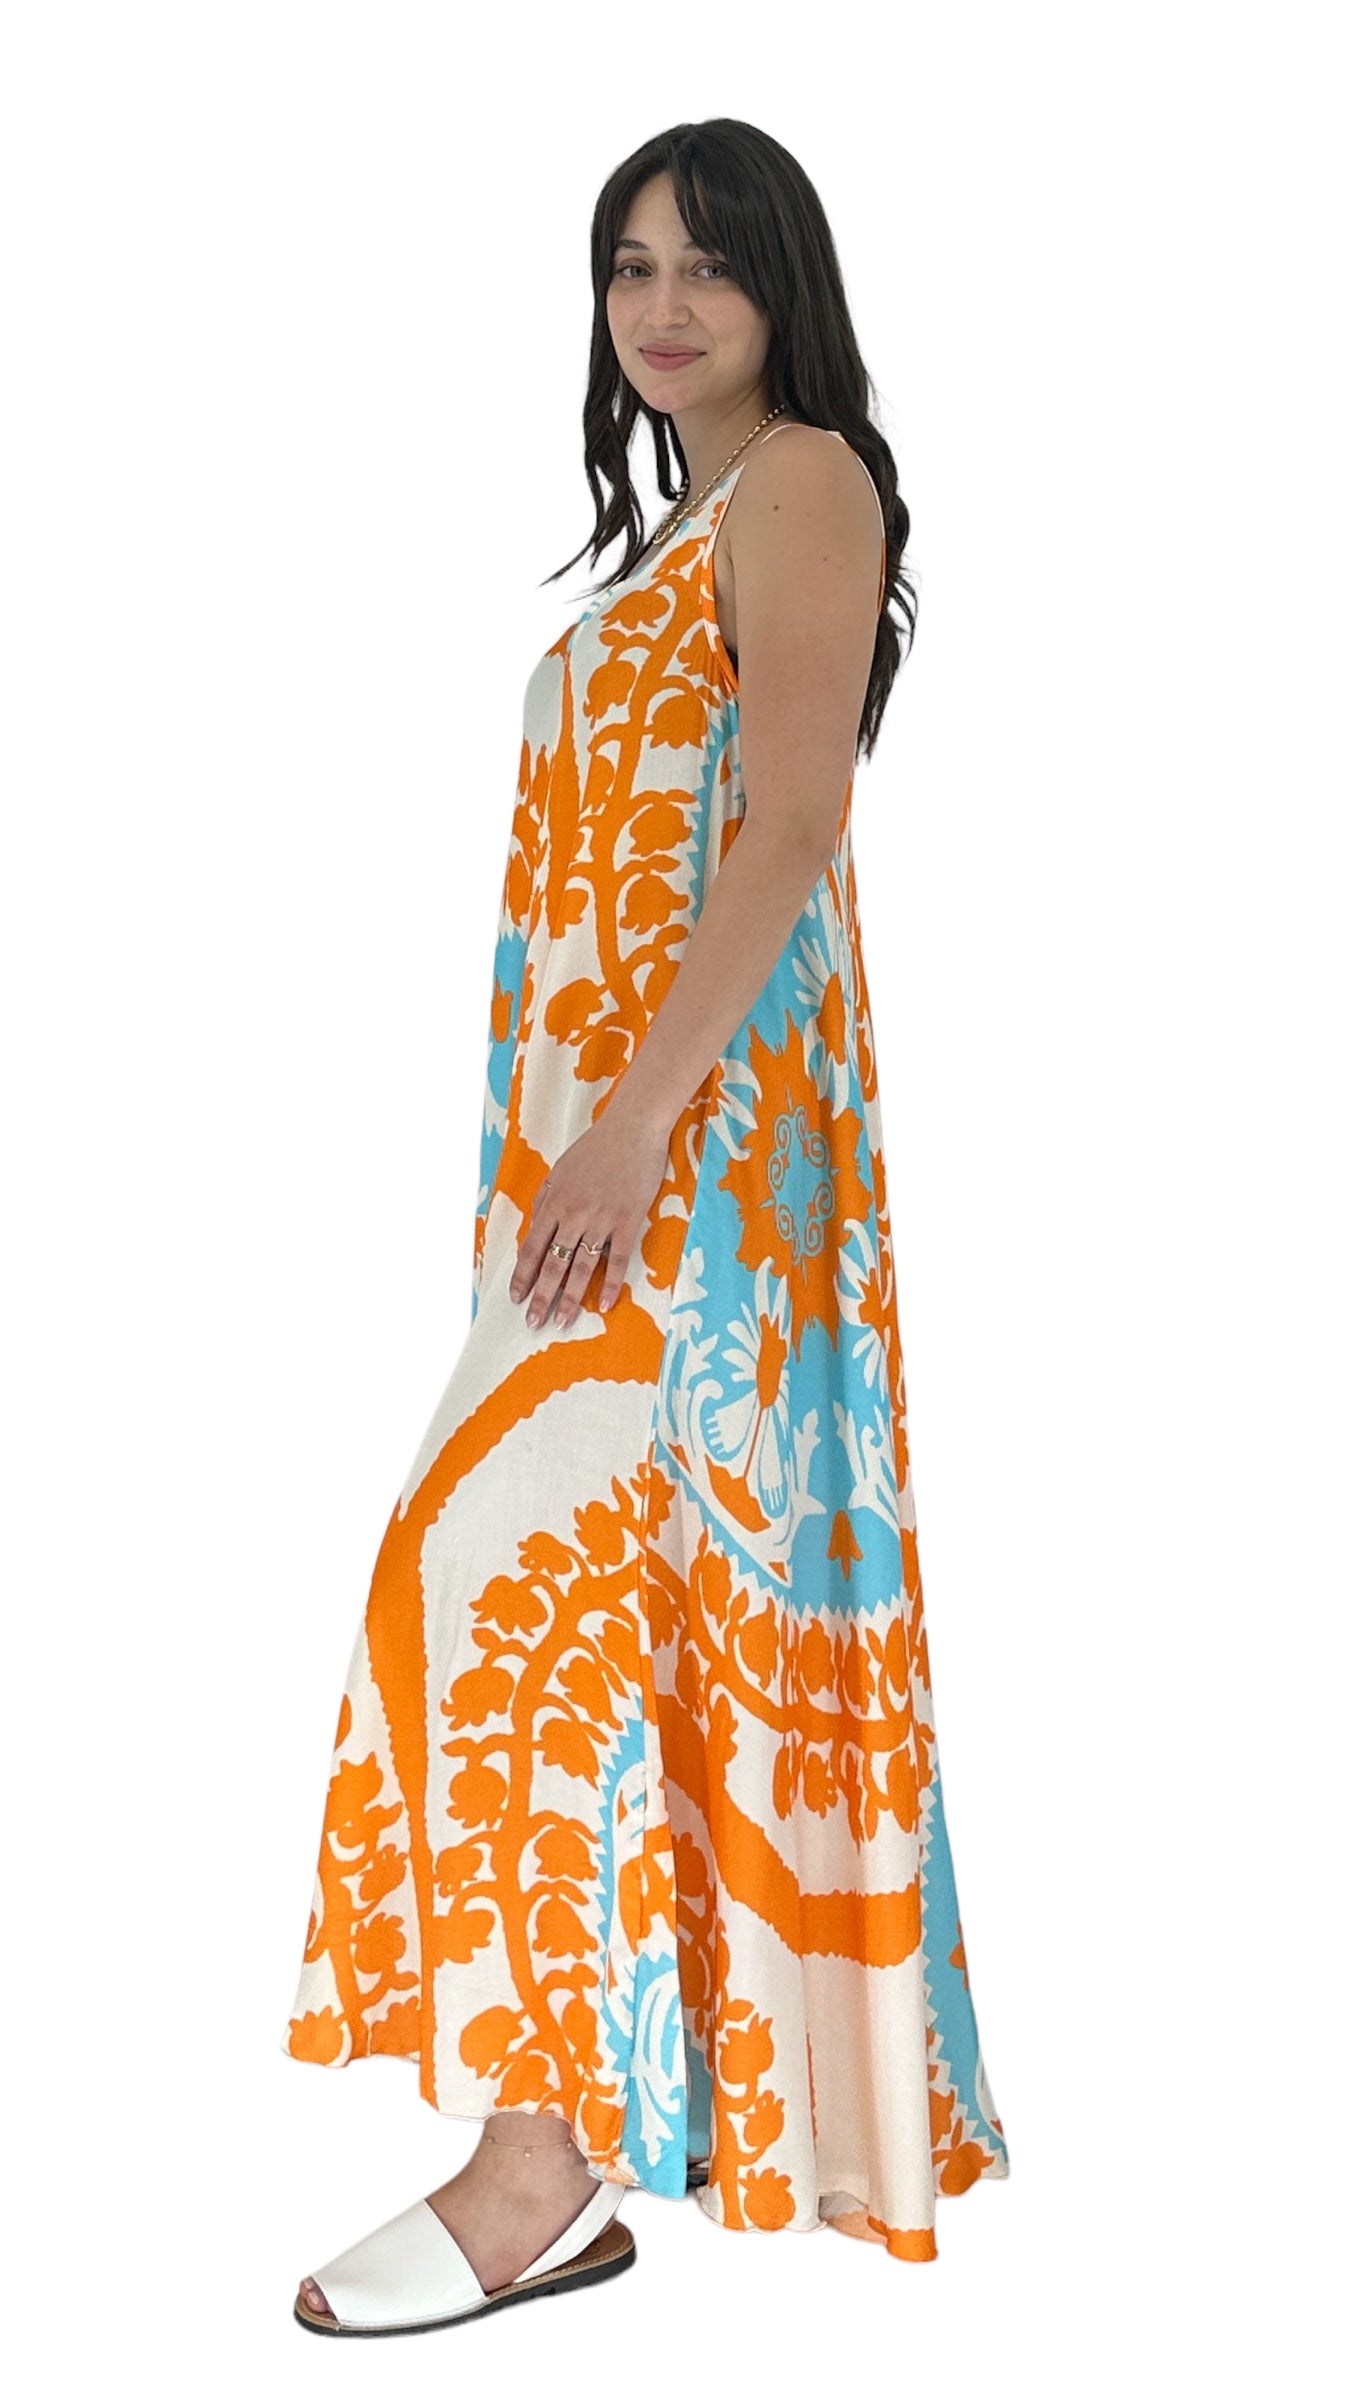 Palma orange dress